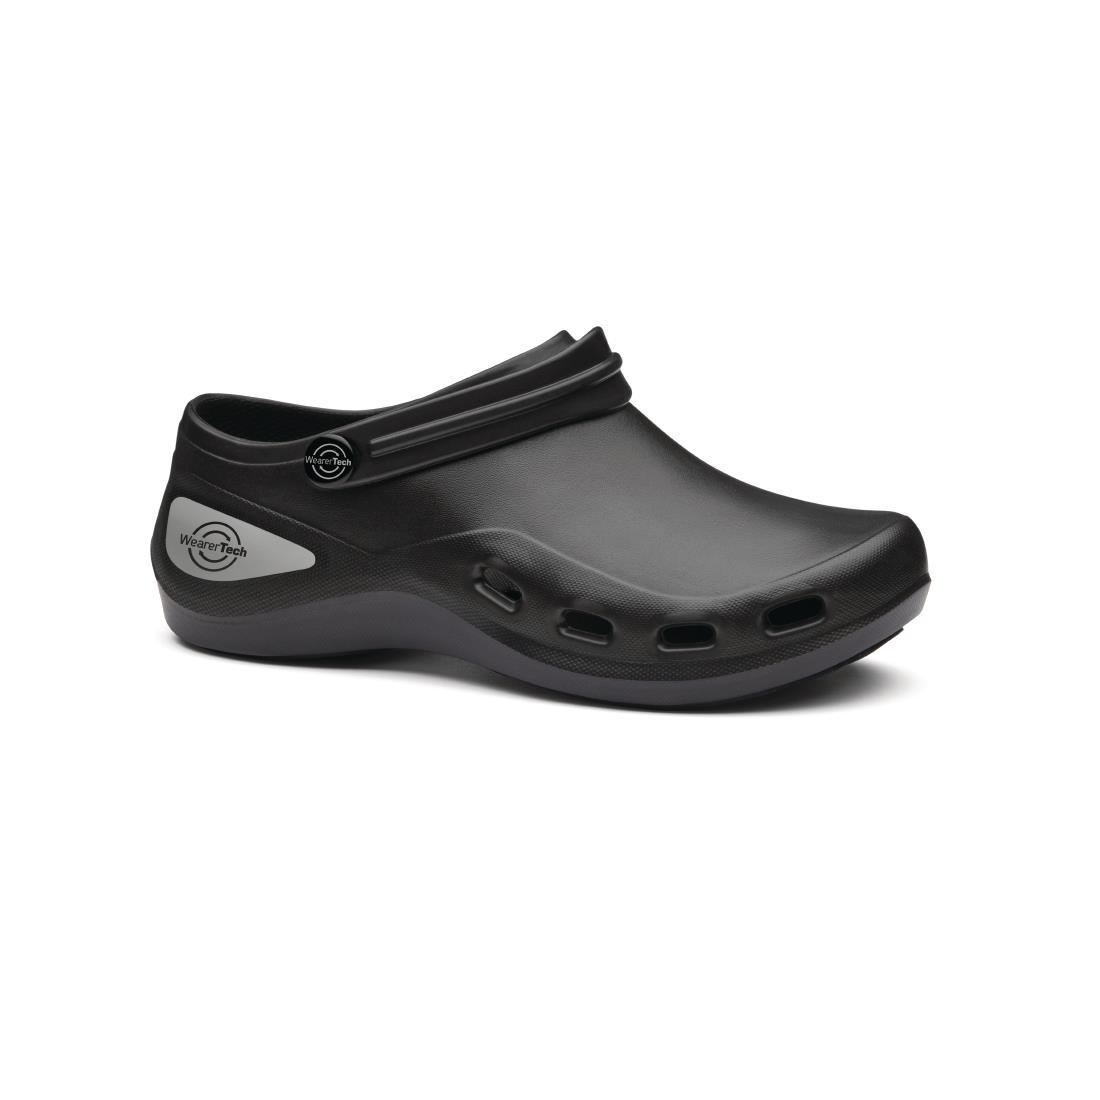 WearerTech Unisex Invigorate Black Safety Shoe Size 4 - BB195-37  - 1